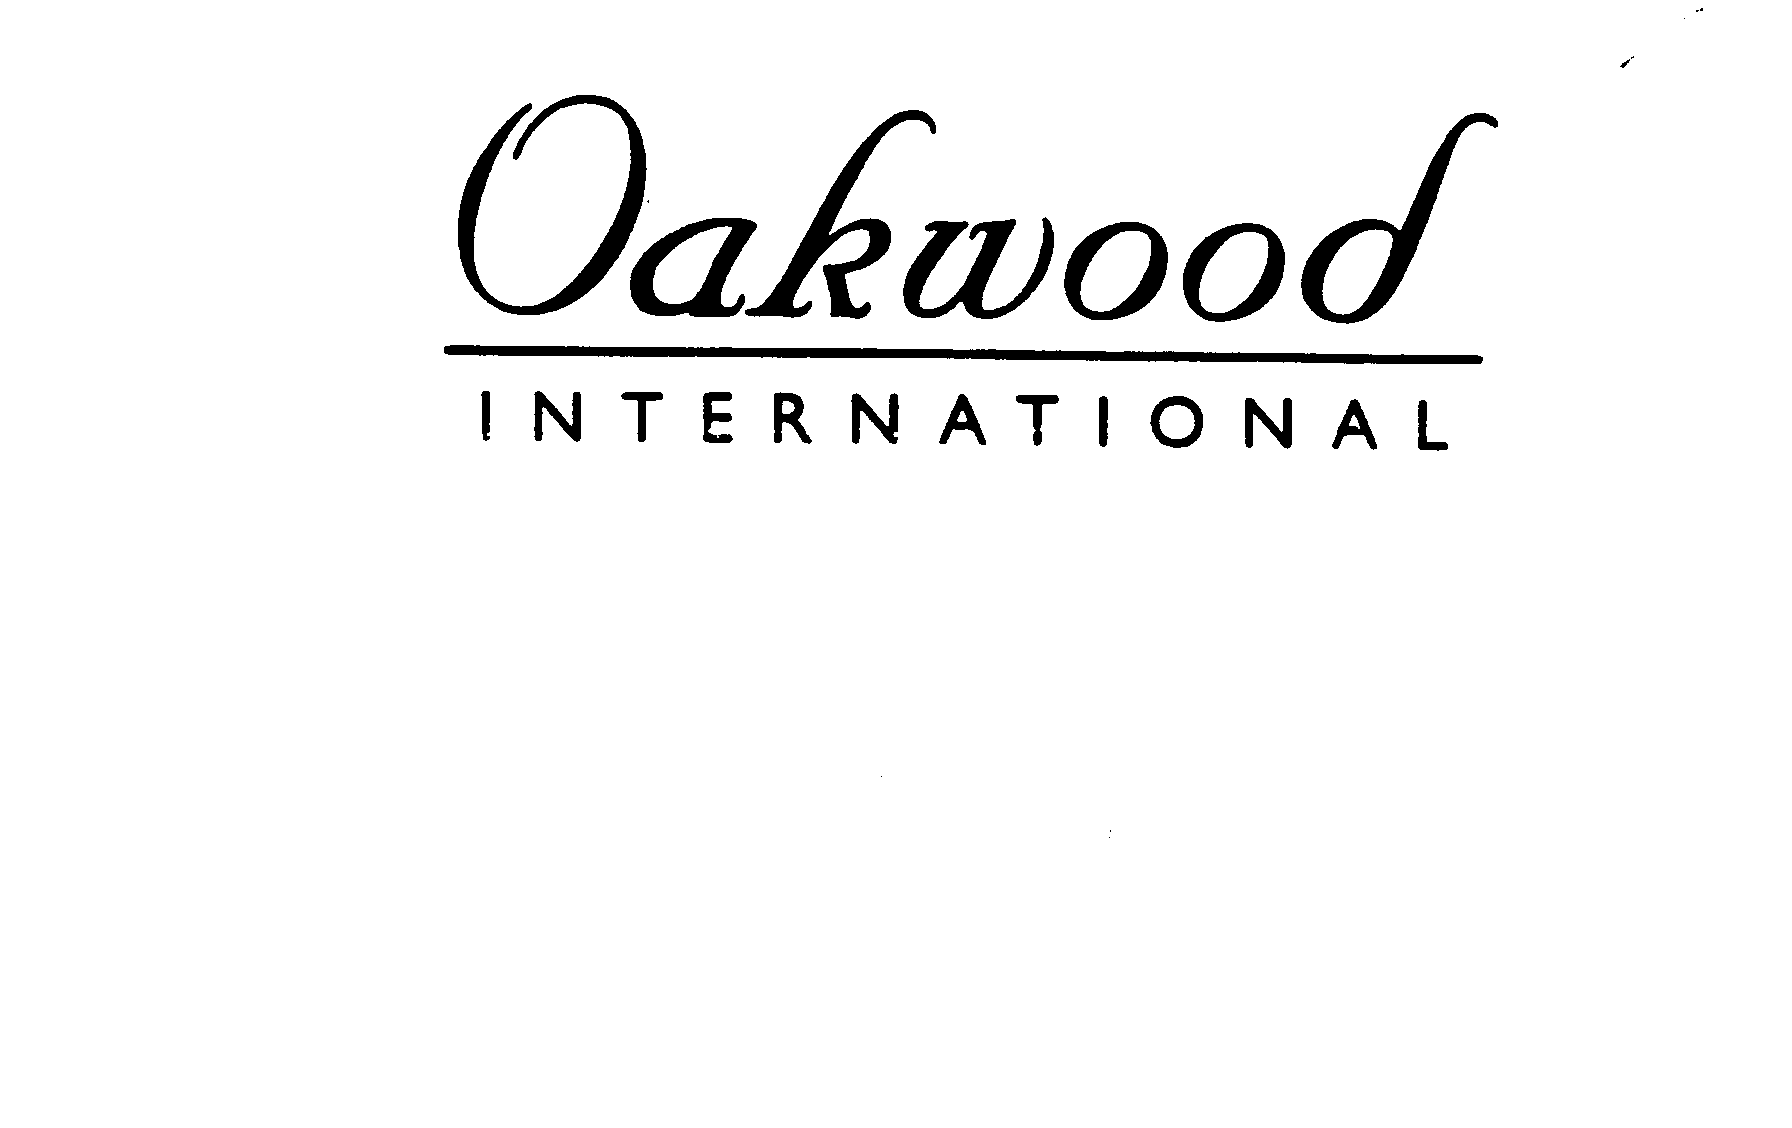  OAKWOOD INTERNATIONAL